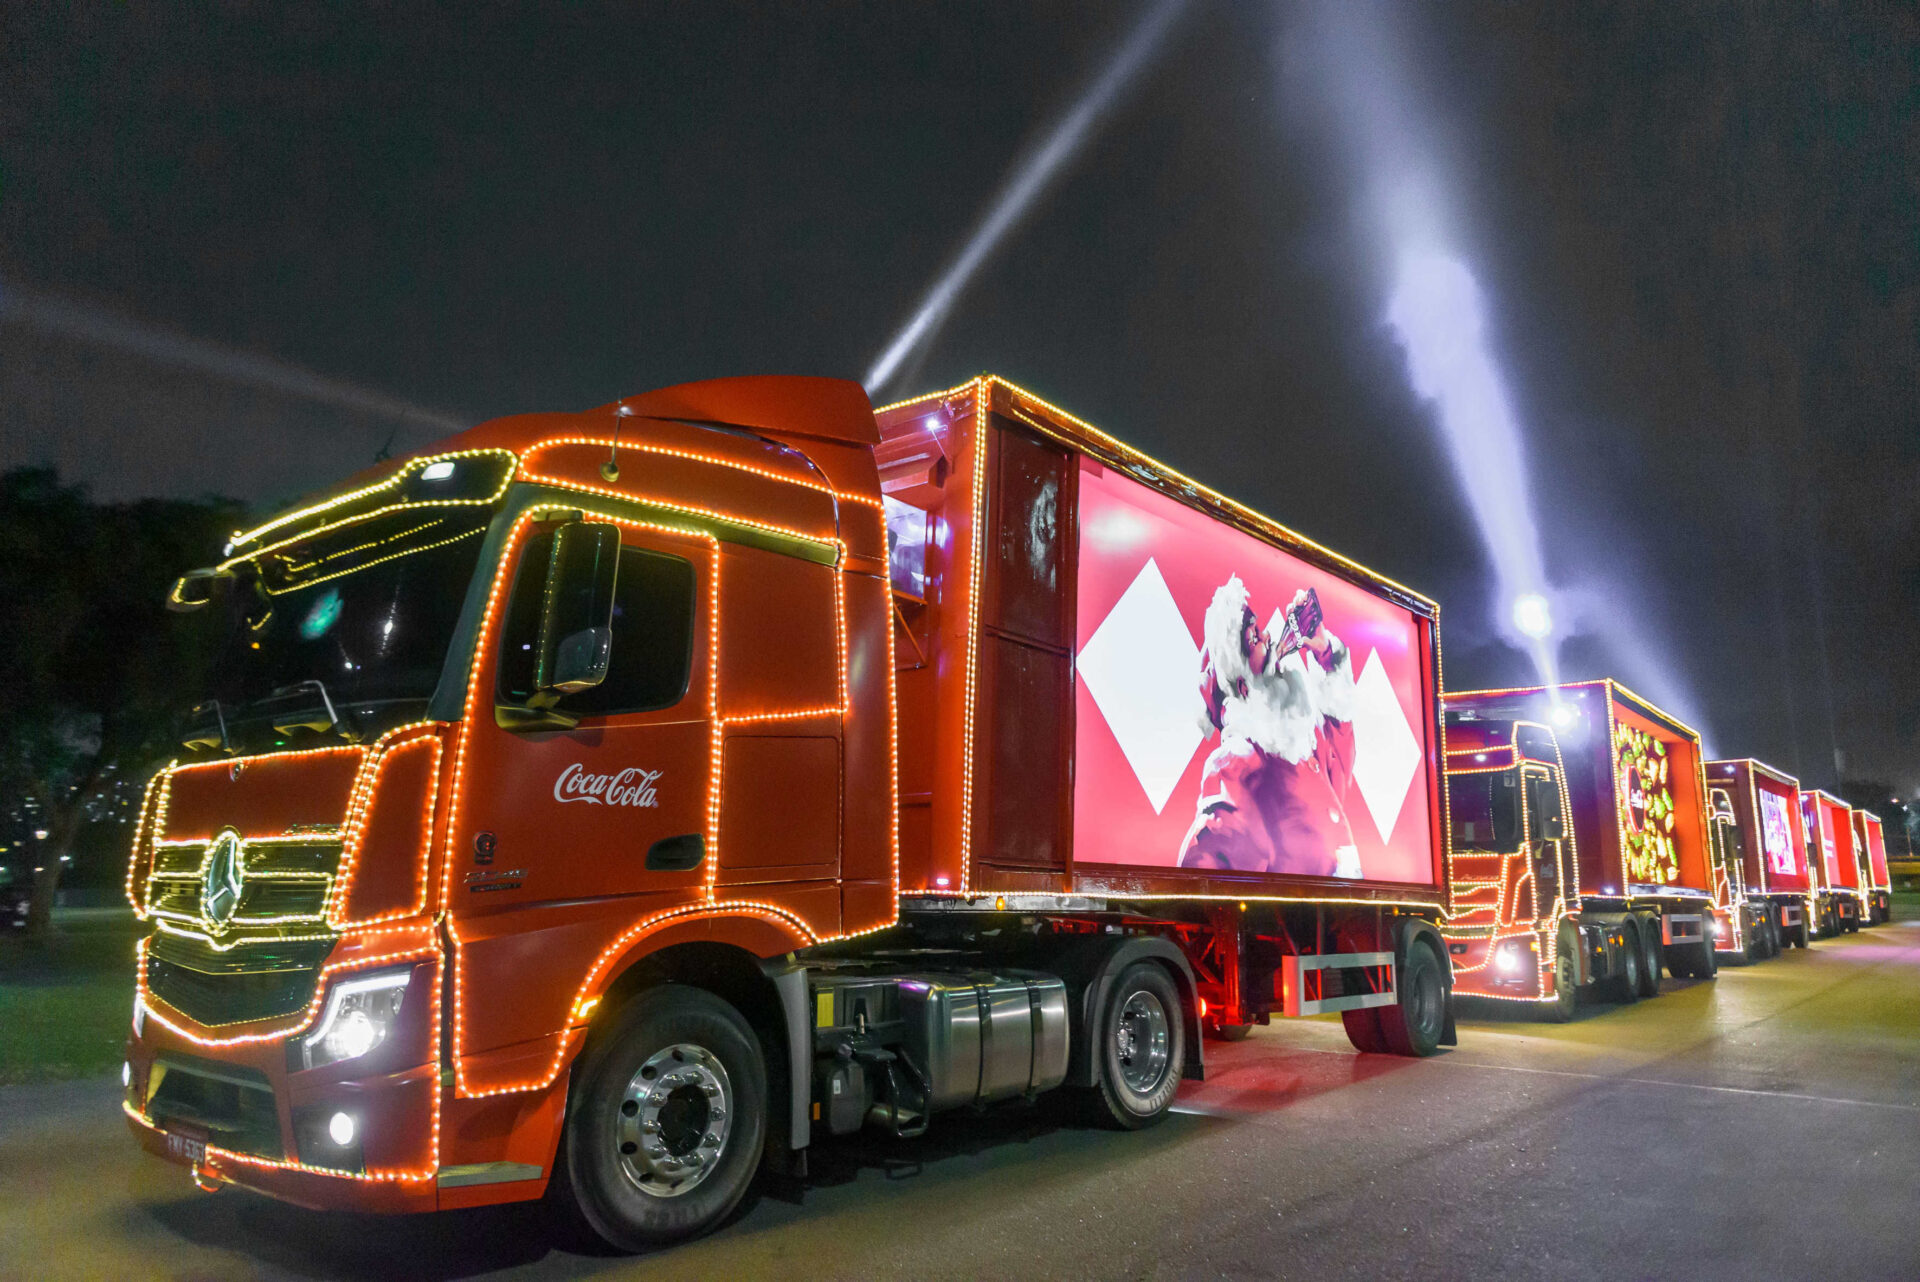 Caravana da Coca-Cola leva a magia do Natal às ruas de Itabirito no dia 1 de dezembro